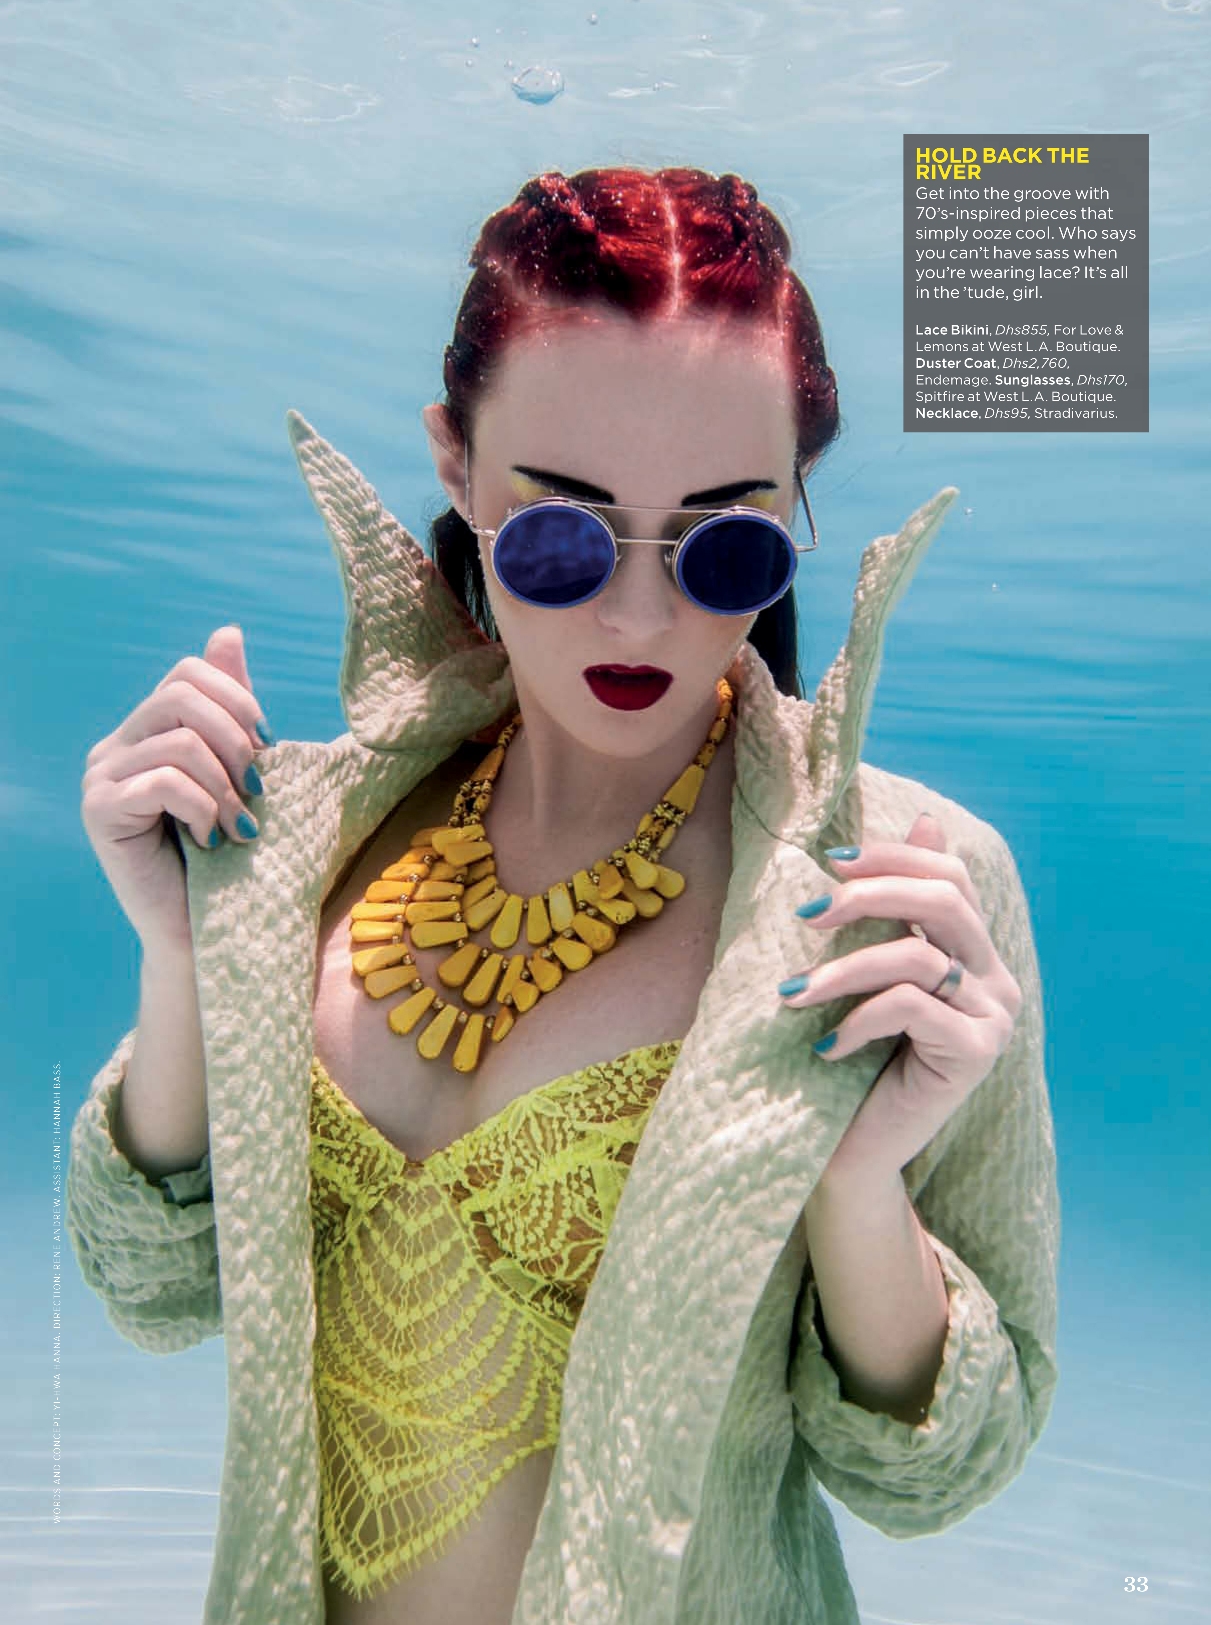 FLC Models & Talents - Catalogue Shoots - Women's Health Magazine - Underwater